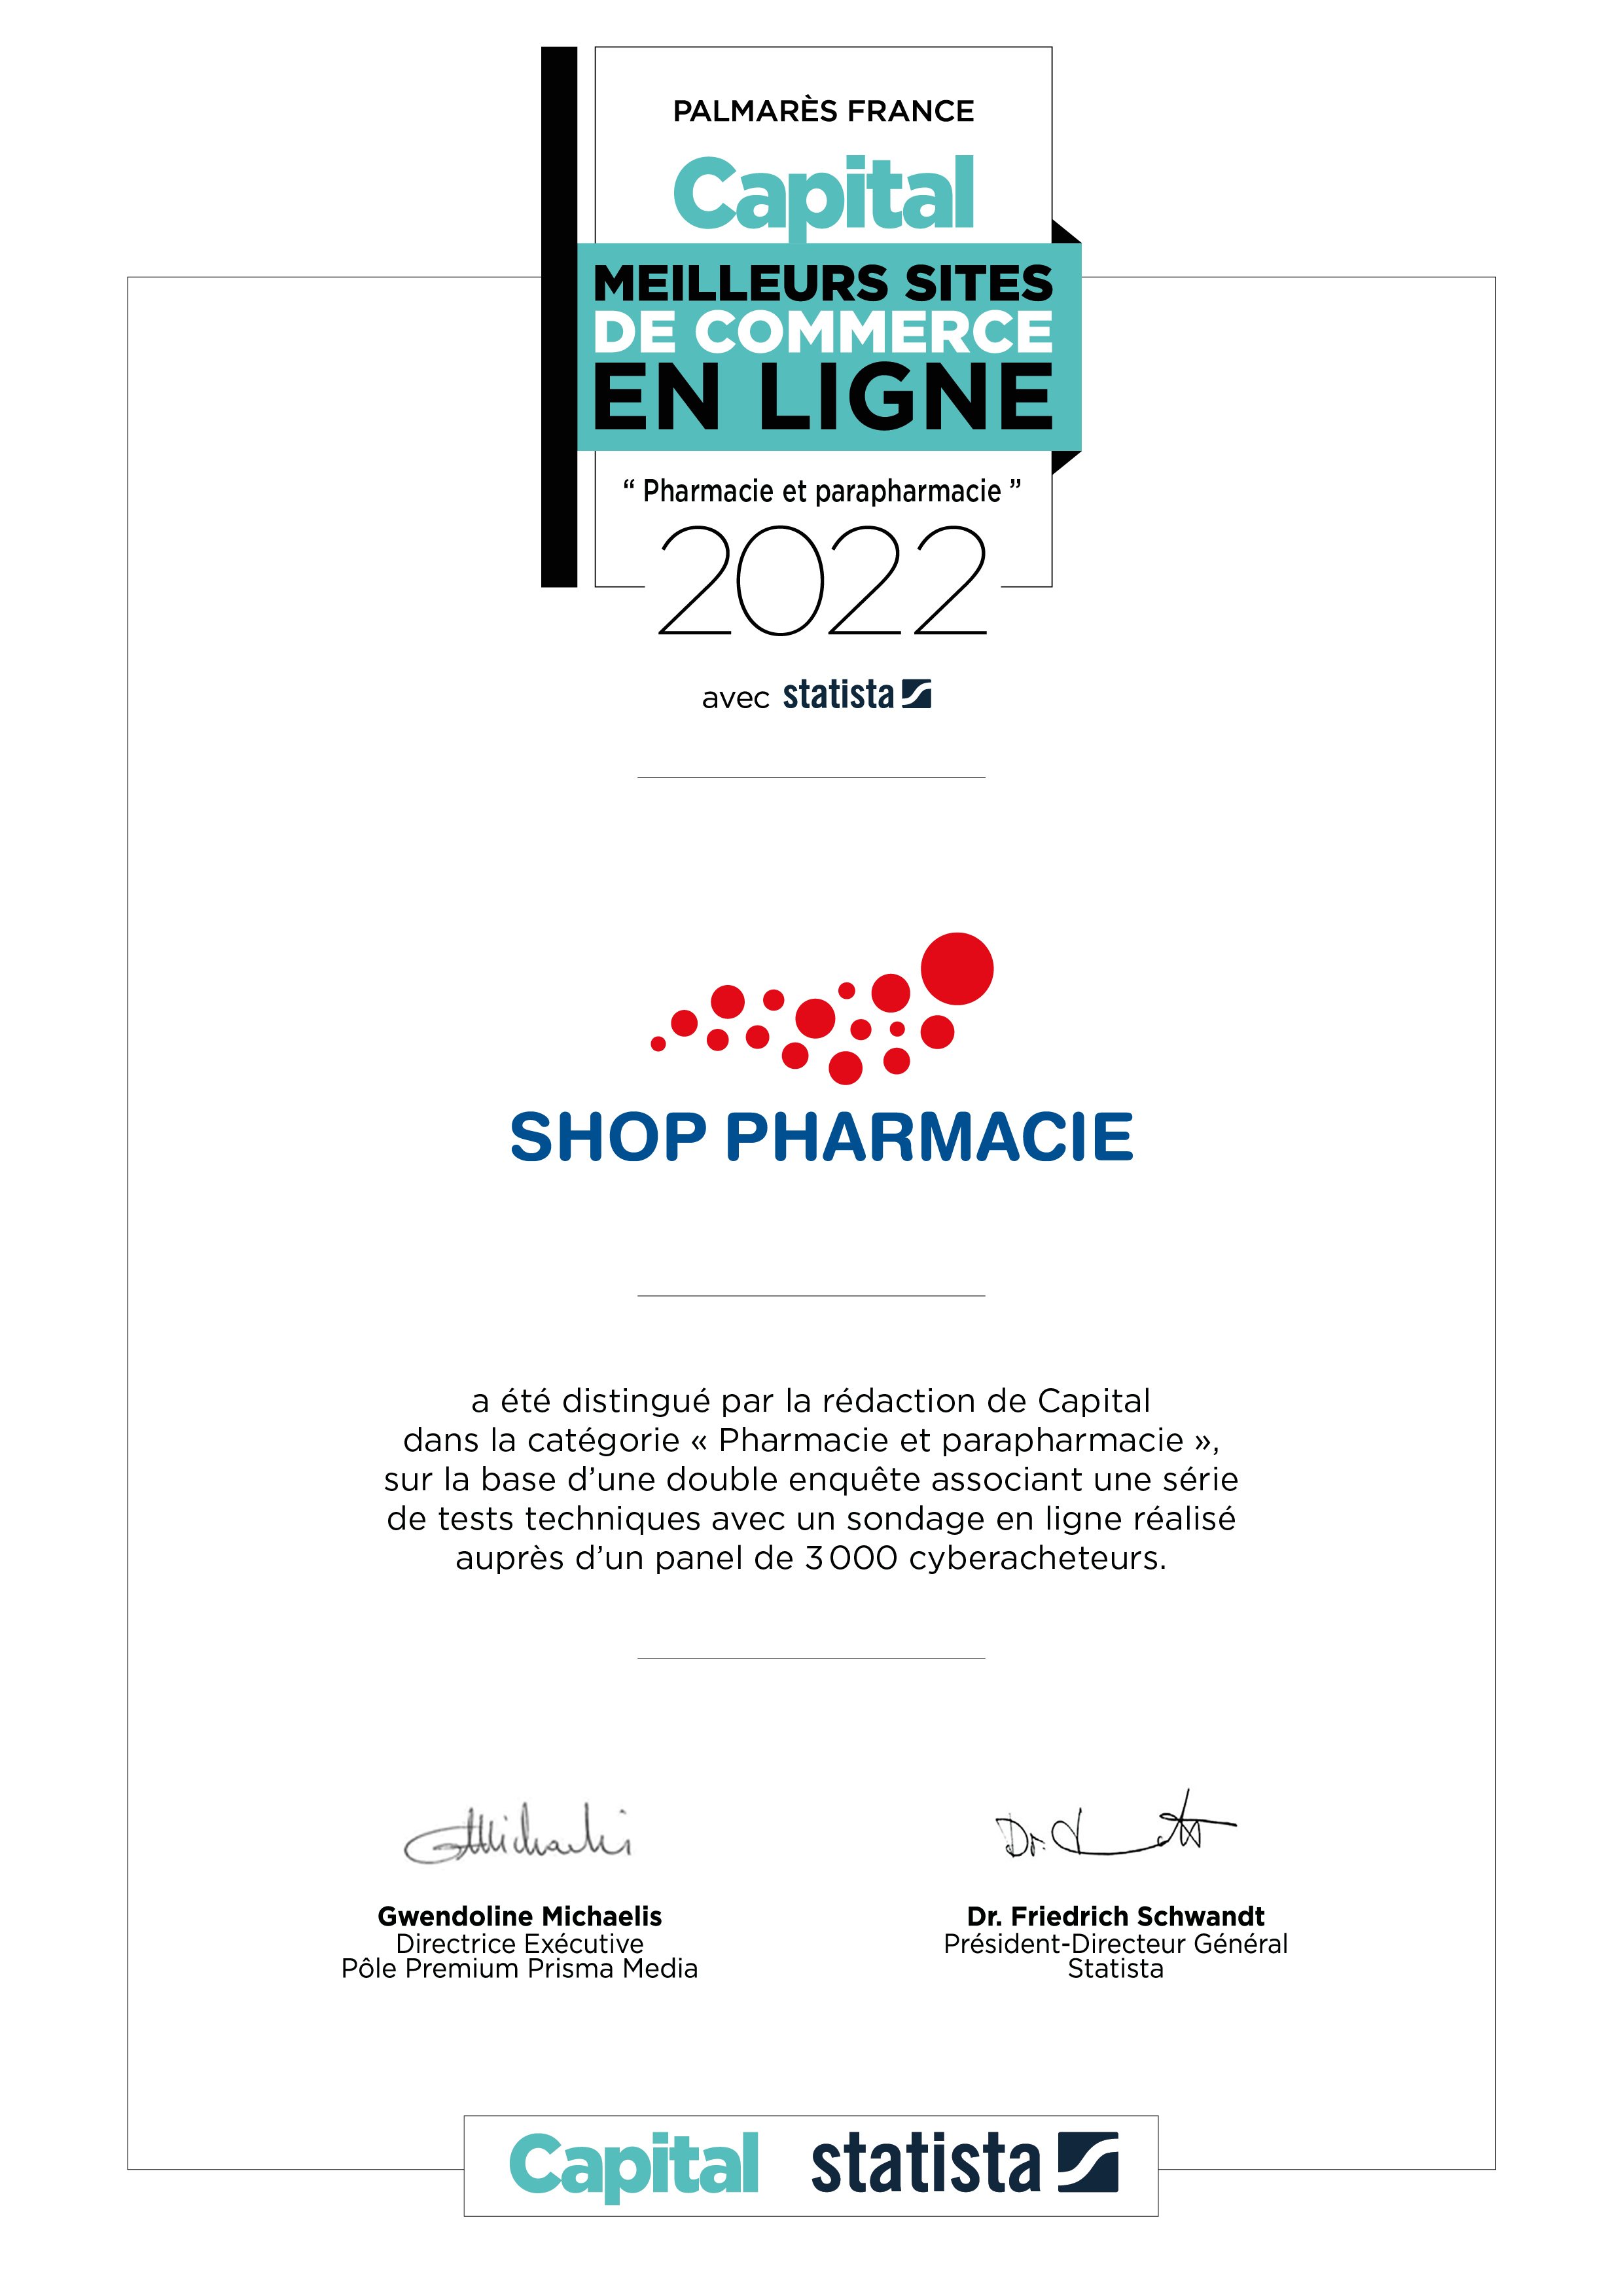 MAM Coussinets d'allaitement 30 pc(s) - Redcare Pharmacie